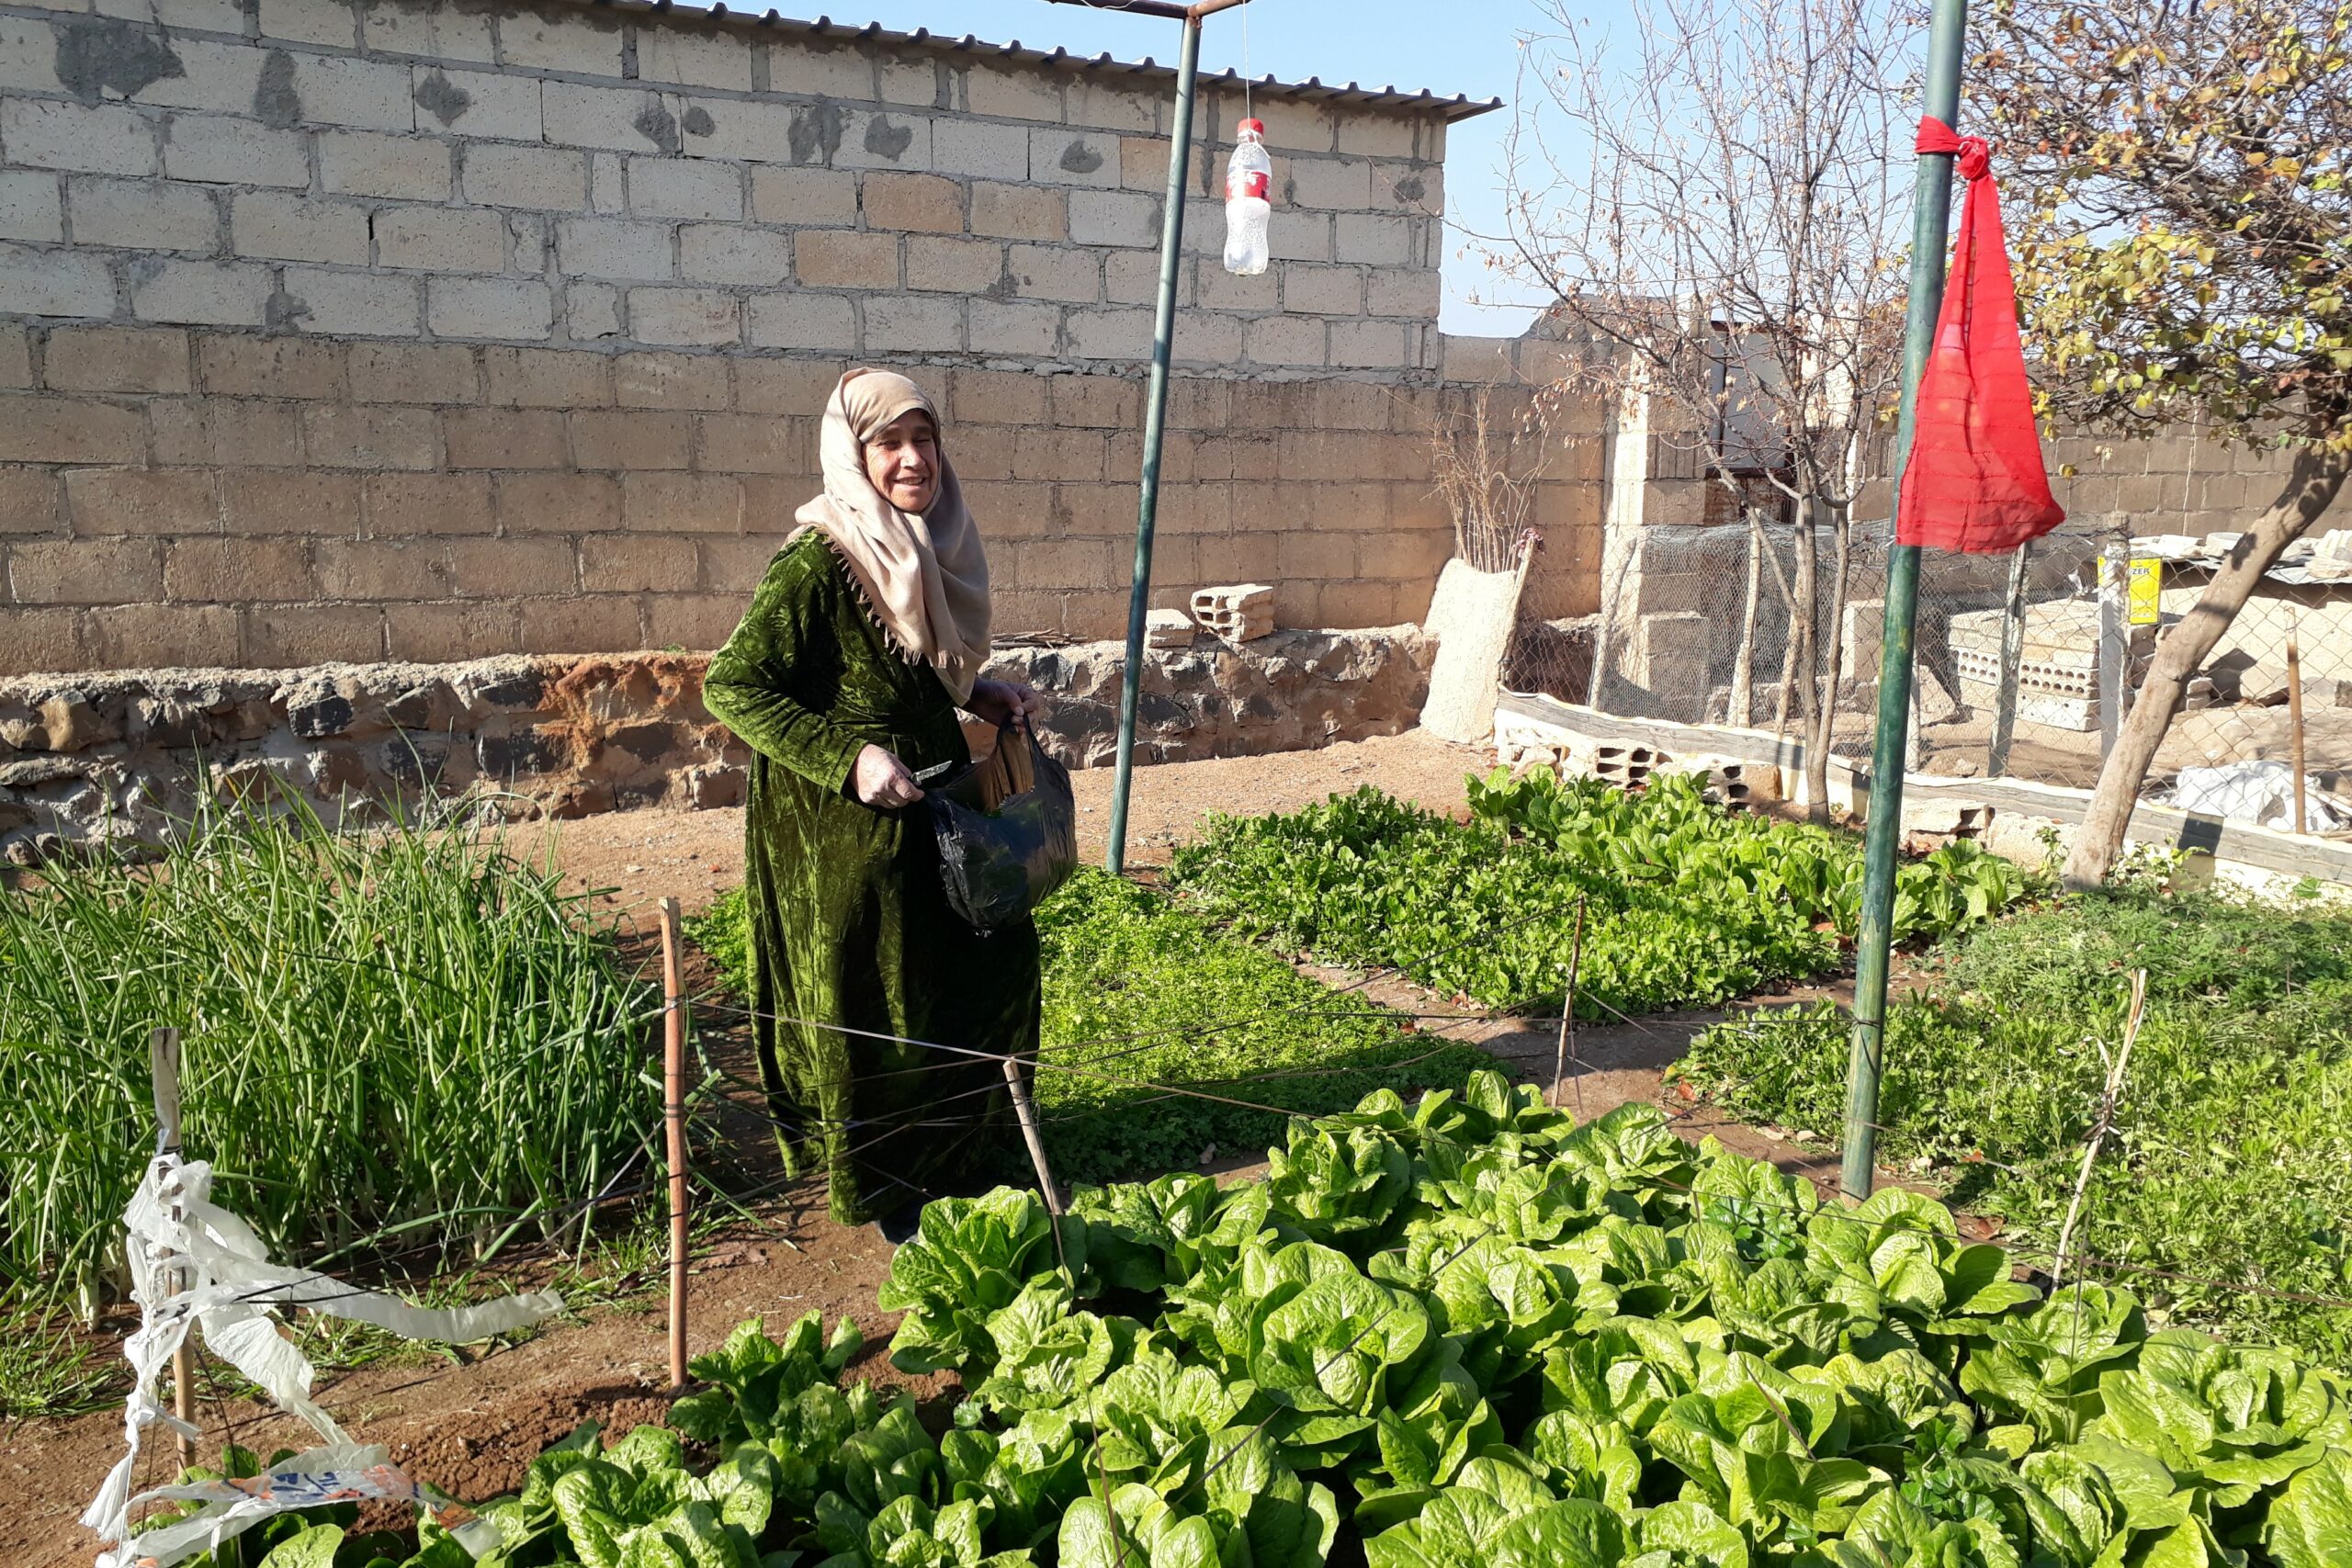 Women Feed Communities with Homestead Vegetable Gardens